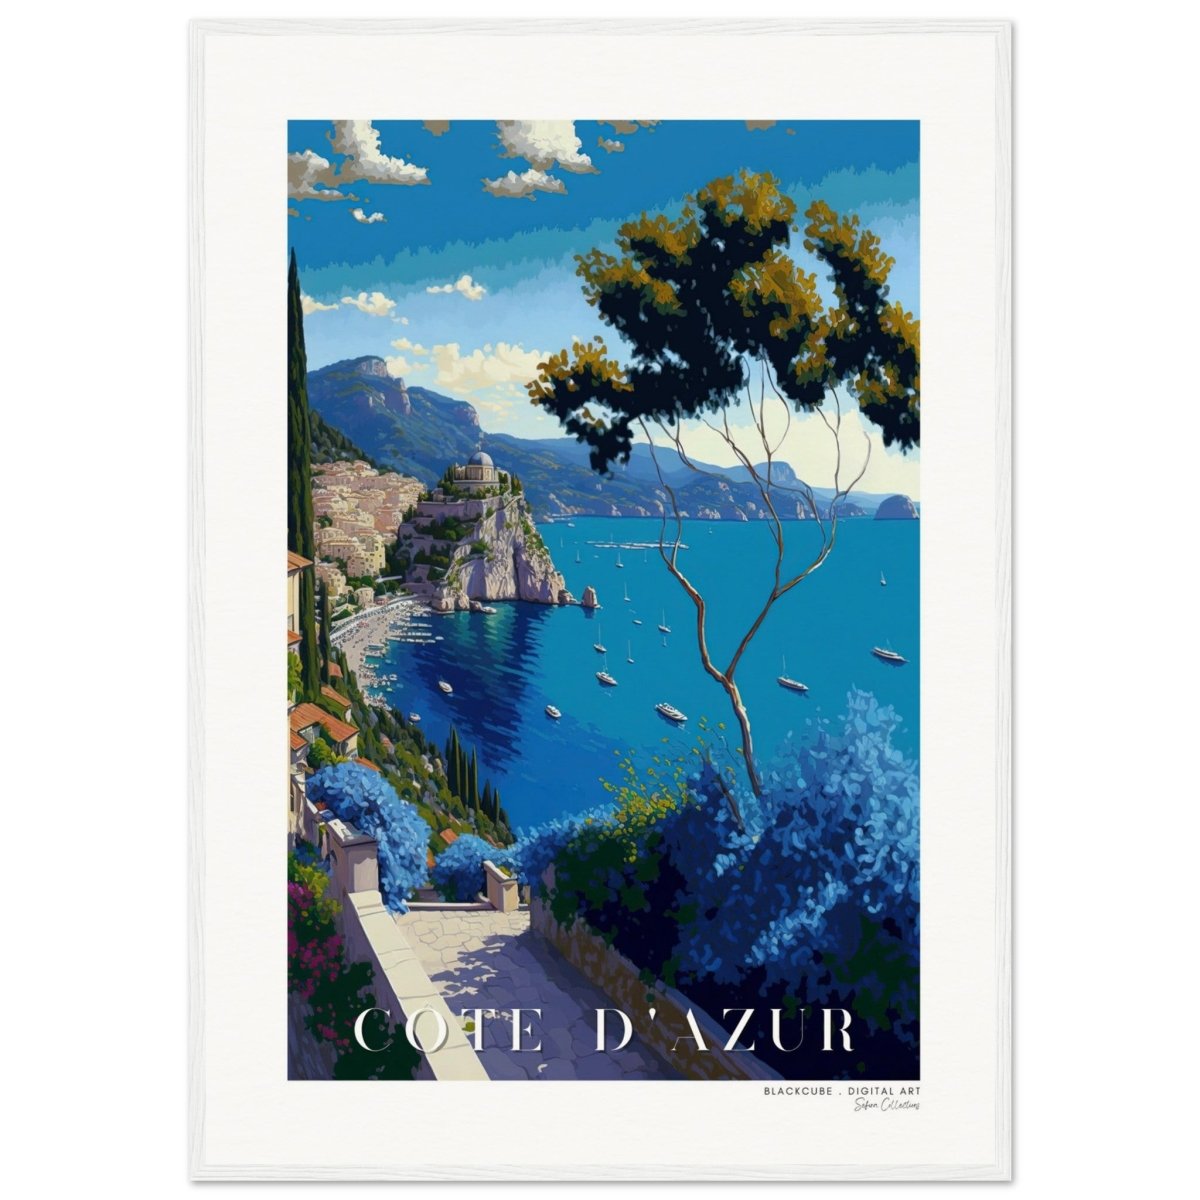 Côte d'Azur, Museum-Quality Matte Paper Wooden Framed Poster | Sefira Art Gallery - Print Material - Sefira Collections